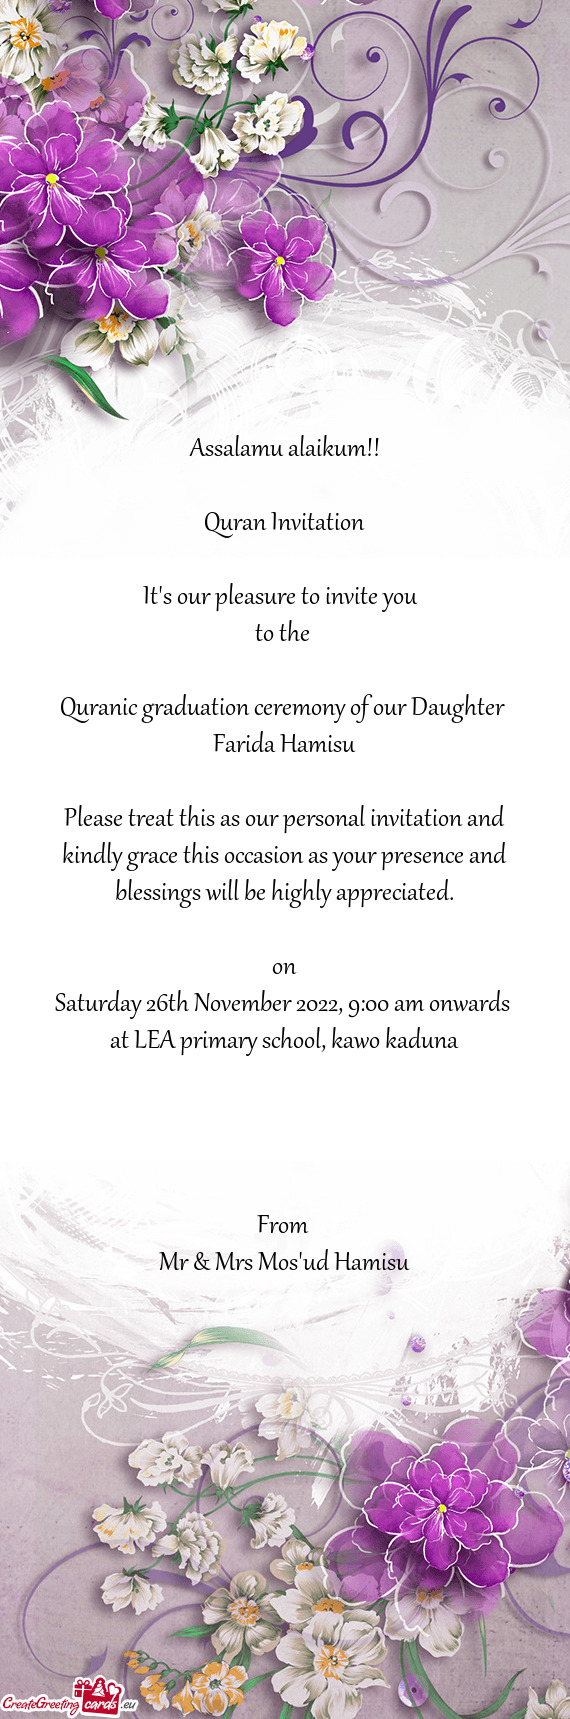 Quranic graduation ceremony of our Daughter